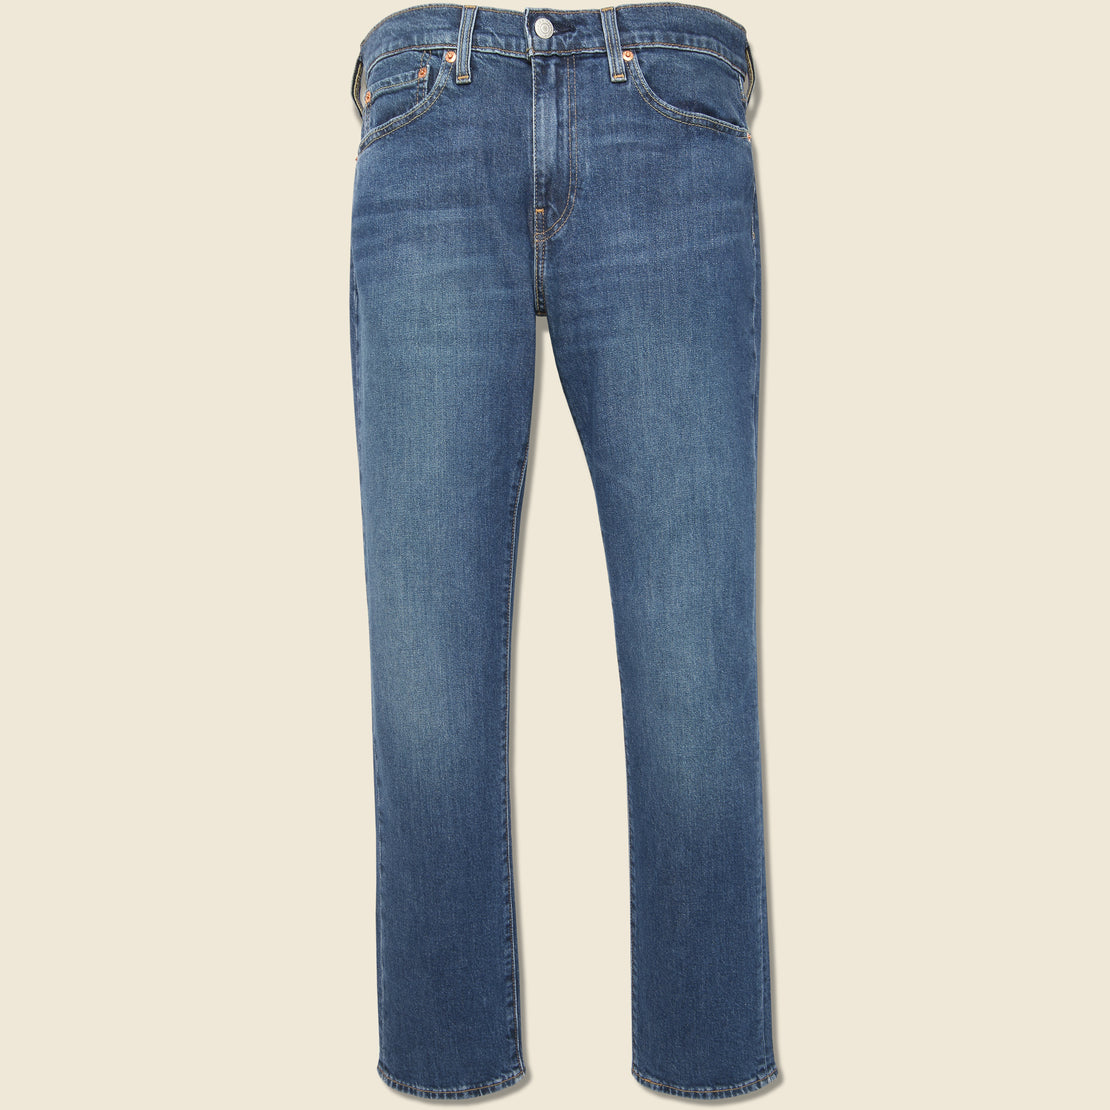 Levi's Men's 511 Slim Fit Jeans Blue Stone 29x34 at Amazon Men's Clothing  store